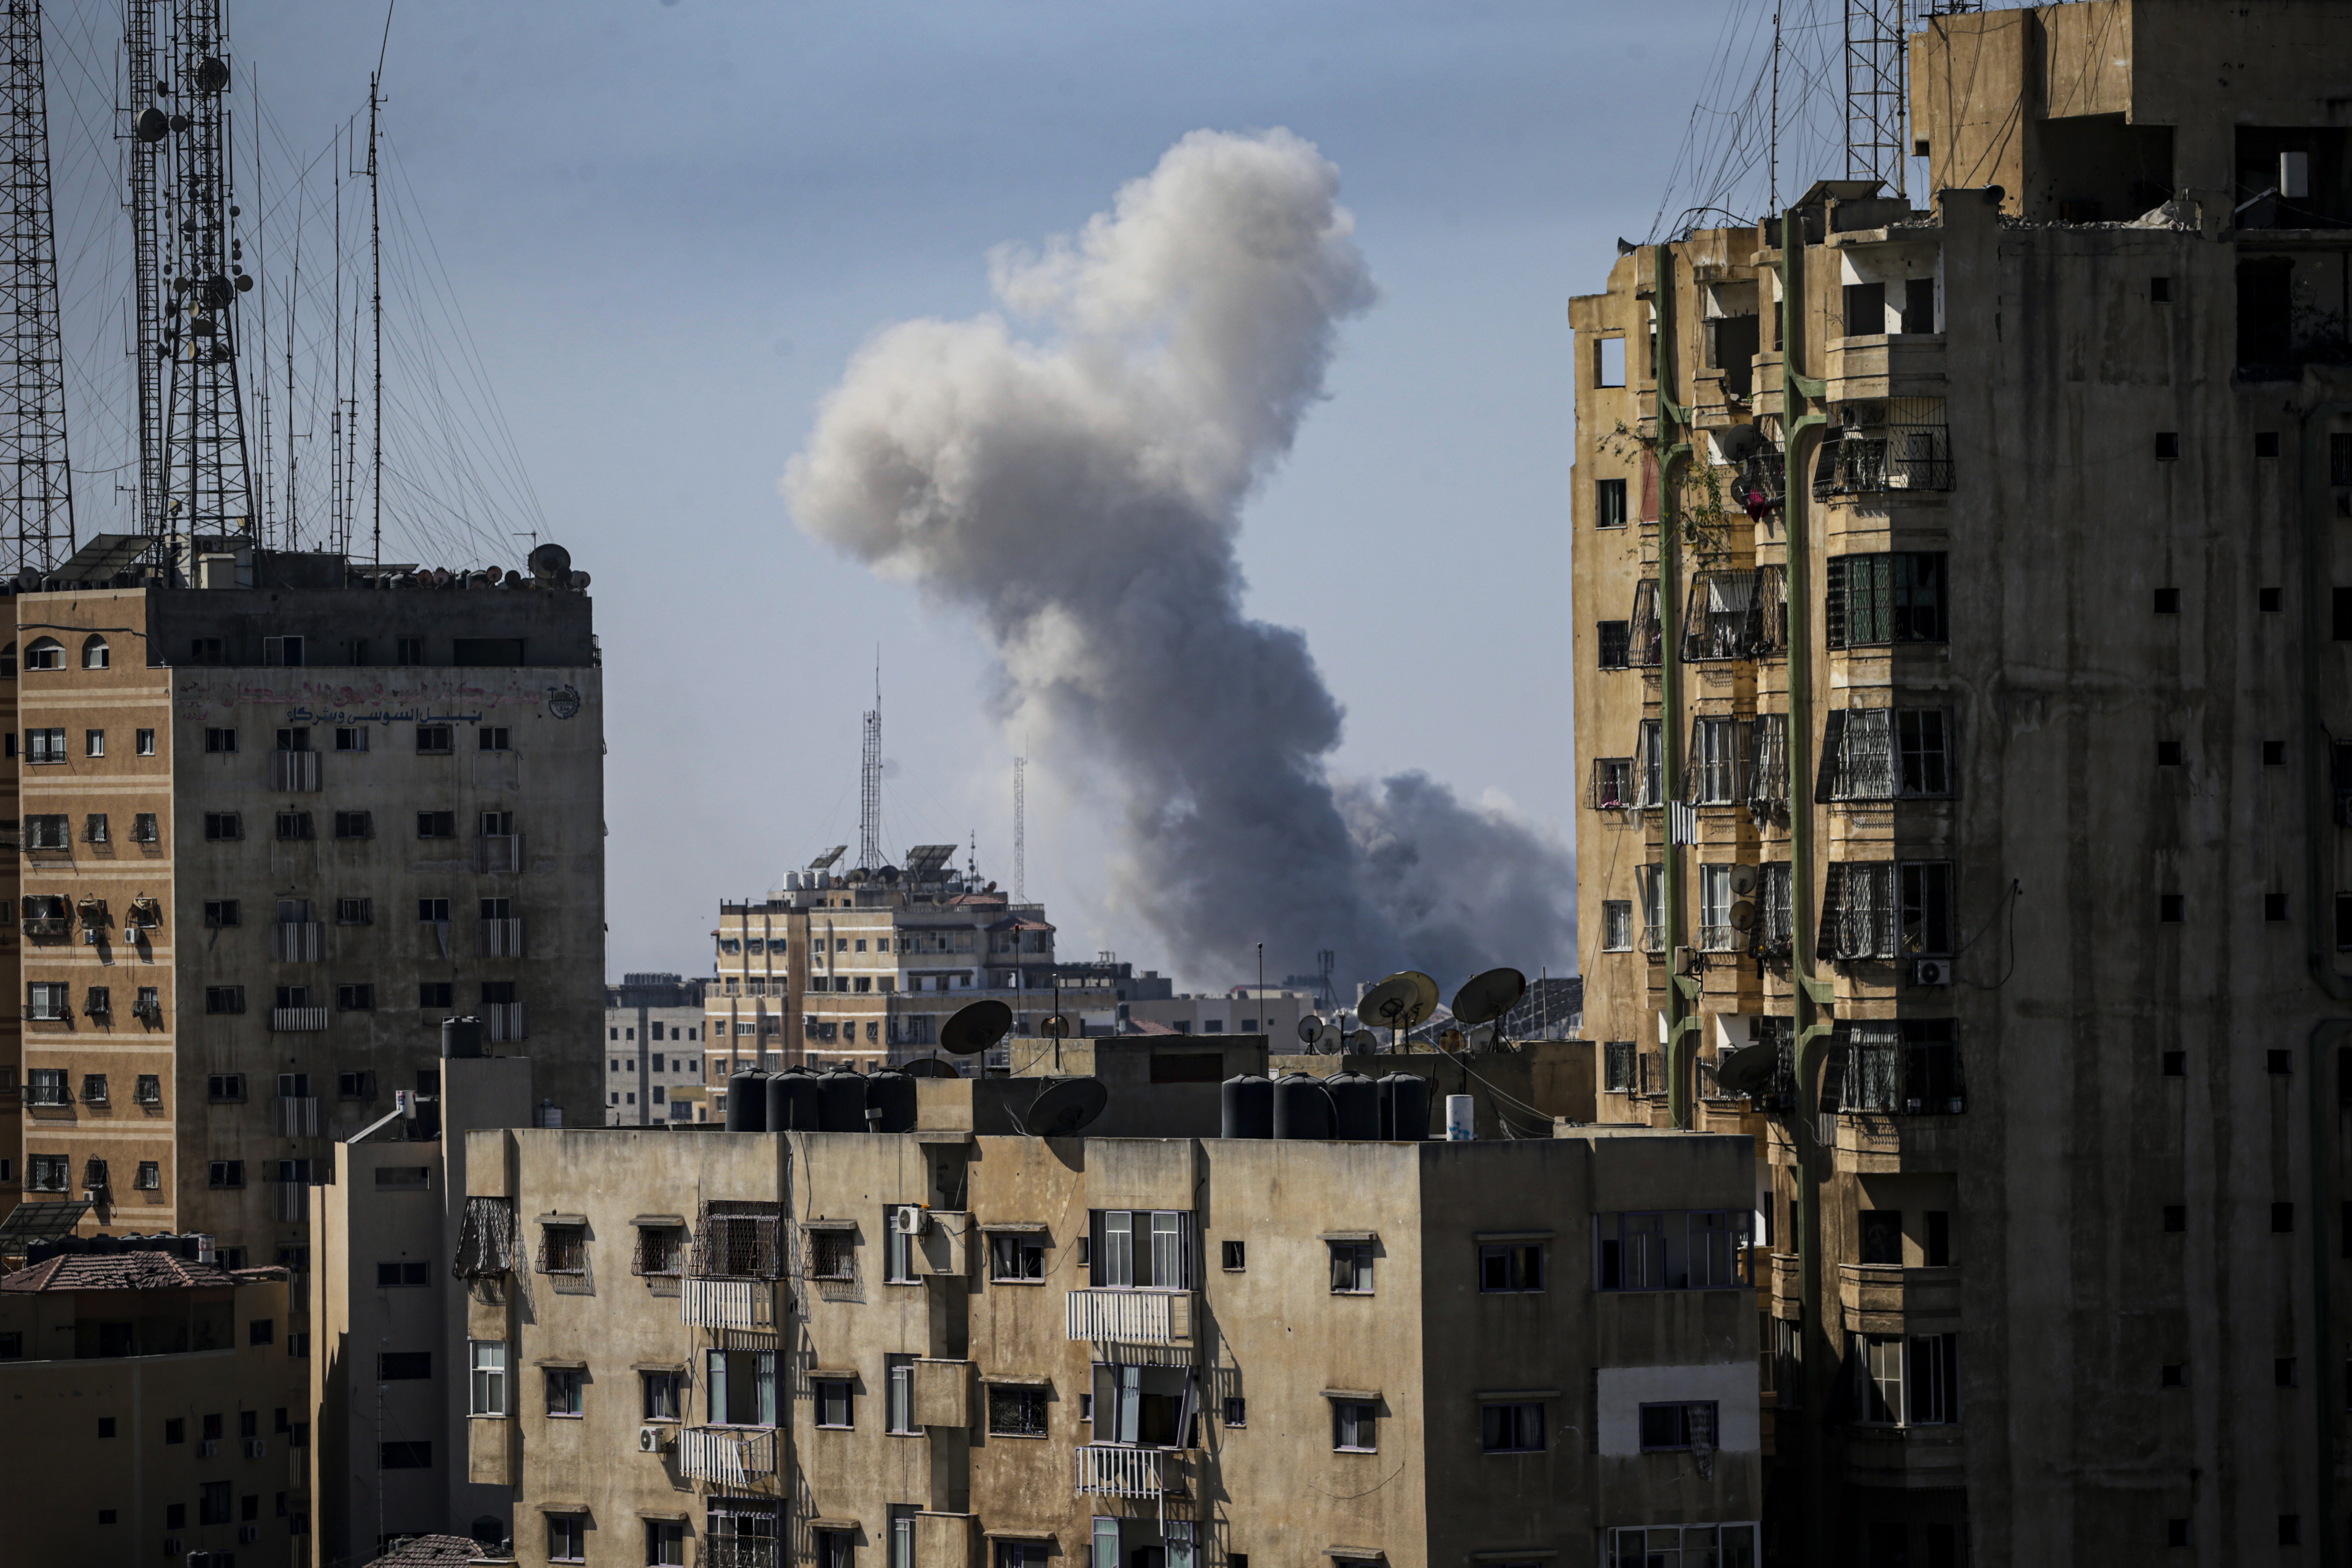 İsrail, Gazze'de 400'den fazla noktayı vurdu